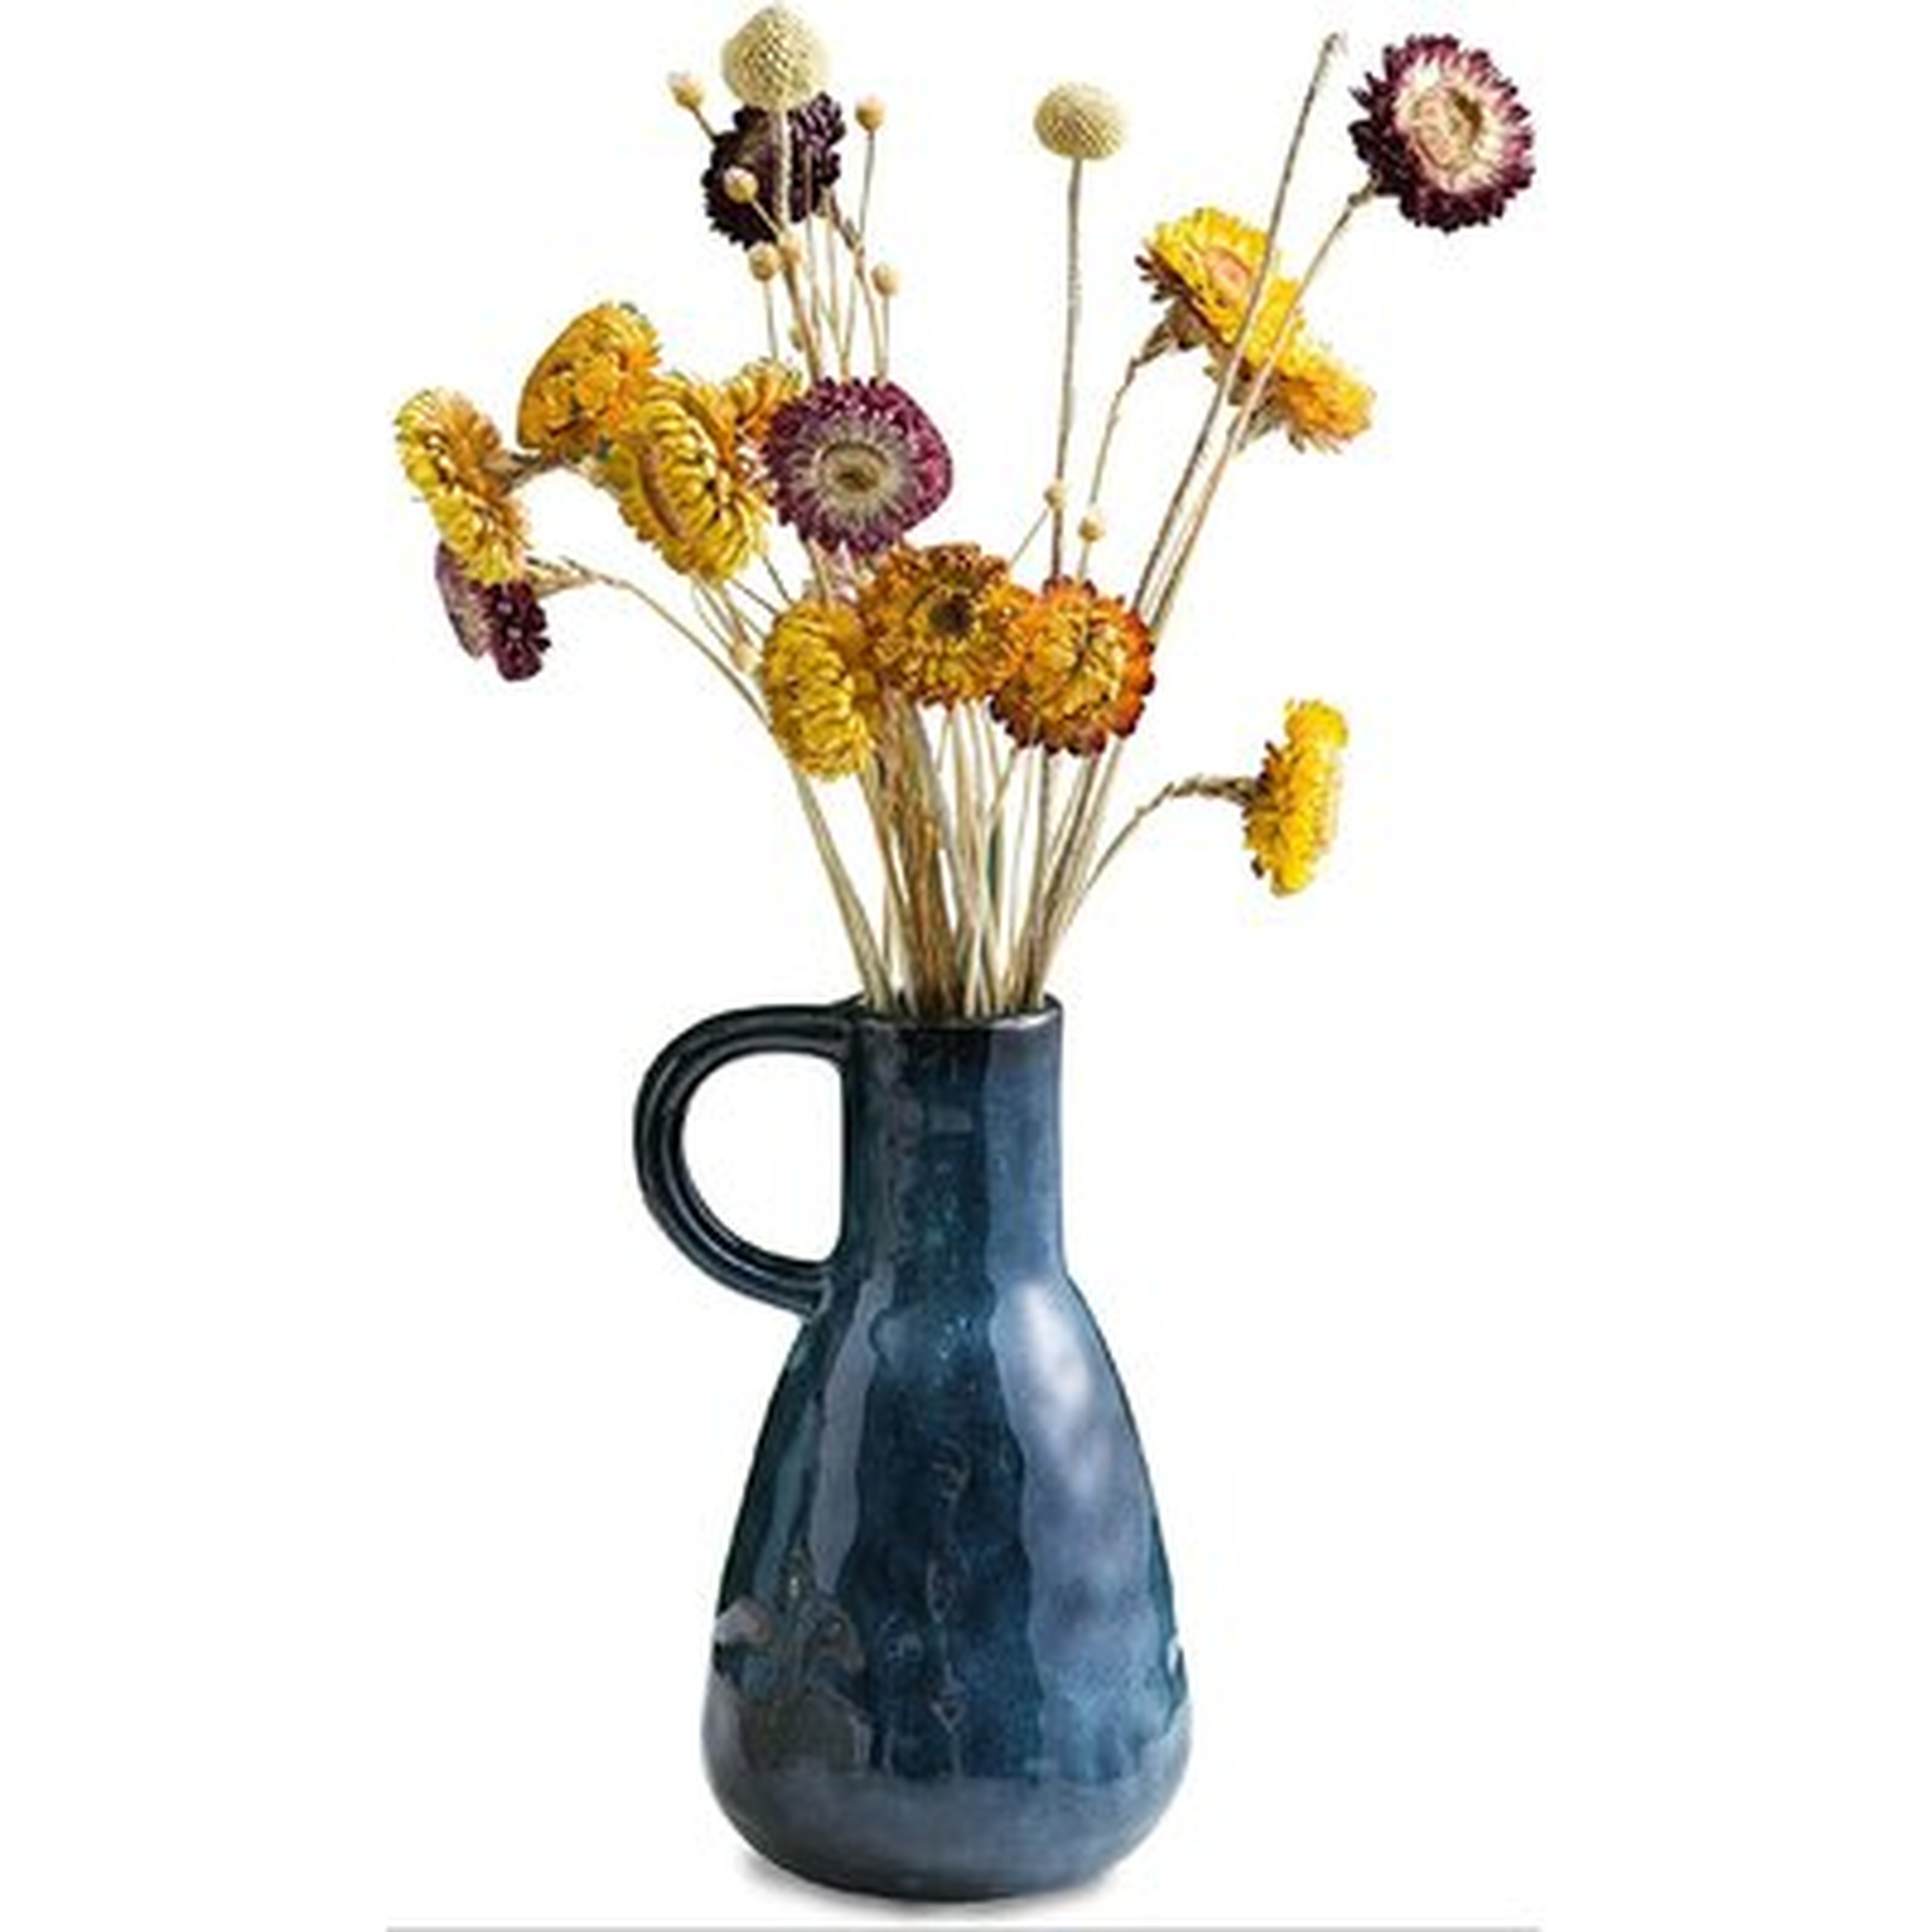 Ceramic Vase, Decorative Vases, Glazed Blue Flower Vases With Handle For Home Décor, Centerpieces, Kitchen, Office, Wedding Or Living Room, Blue Color - Wayfair